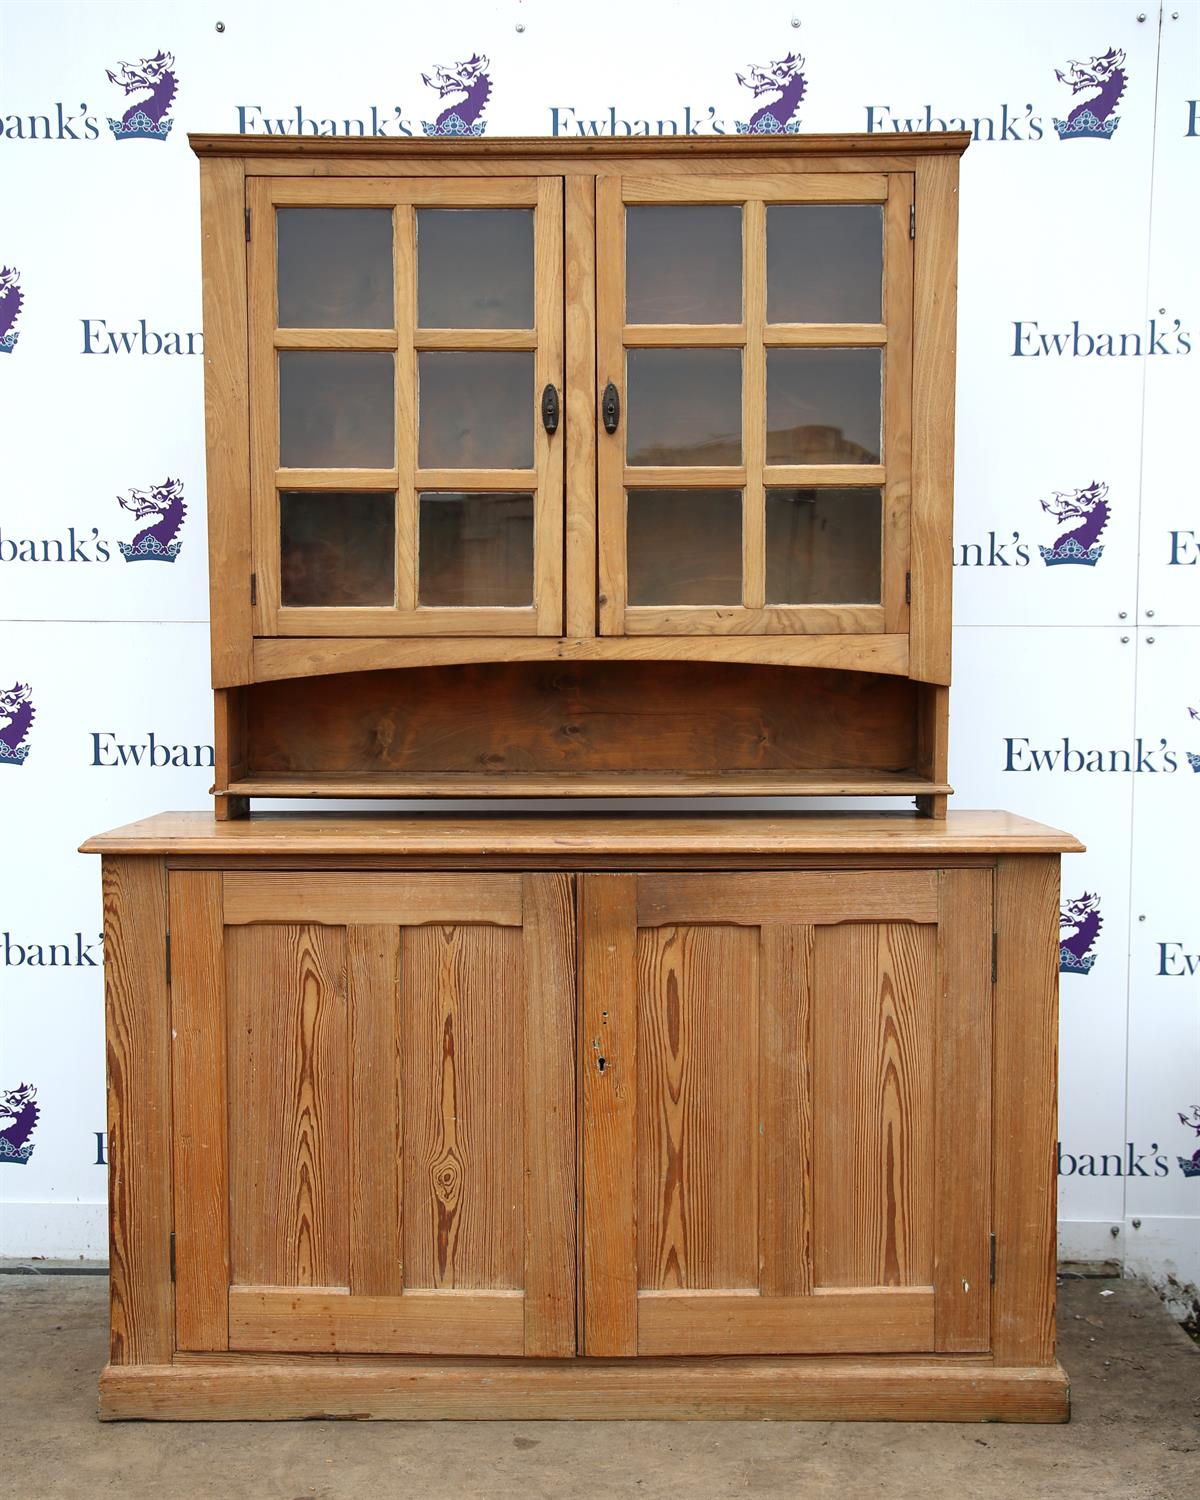 20th century pine dresser base on plinth base, the light oak upper section with glazed cupboards